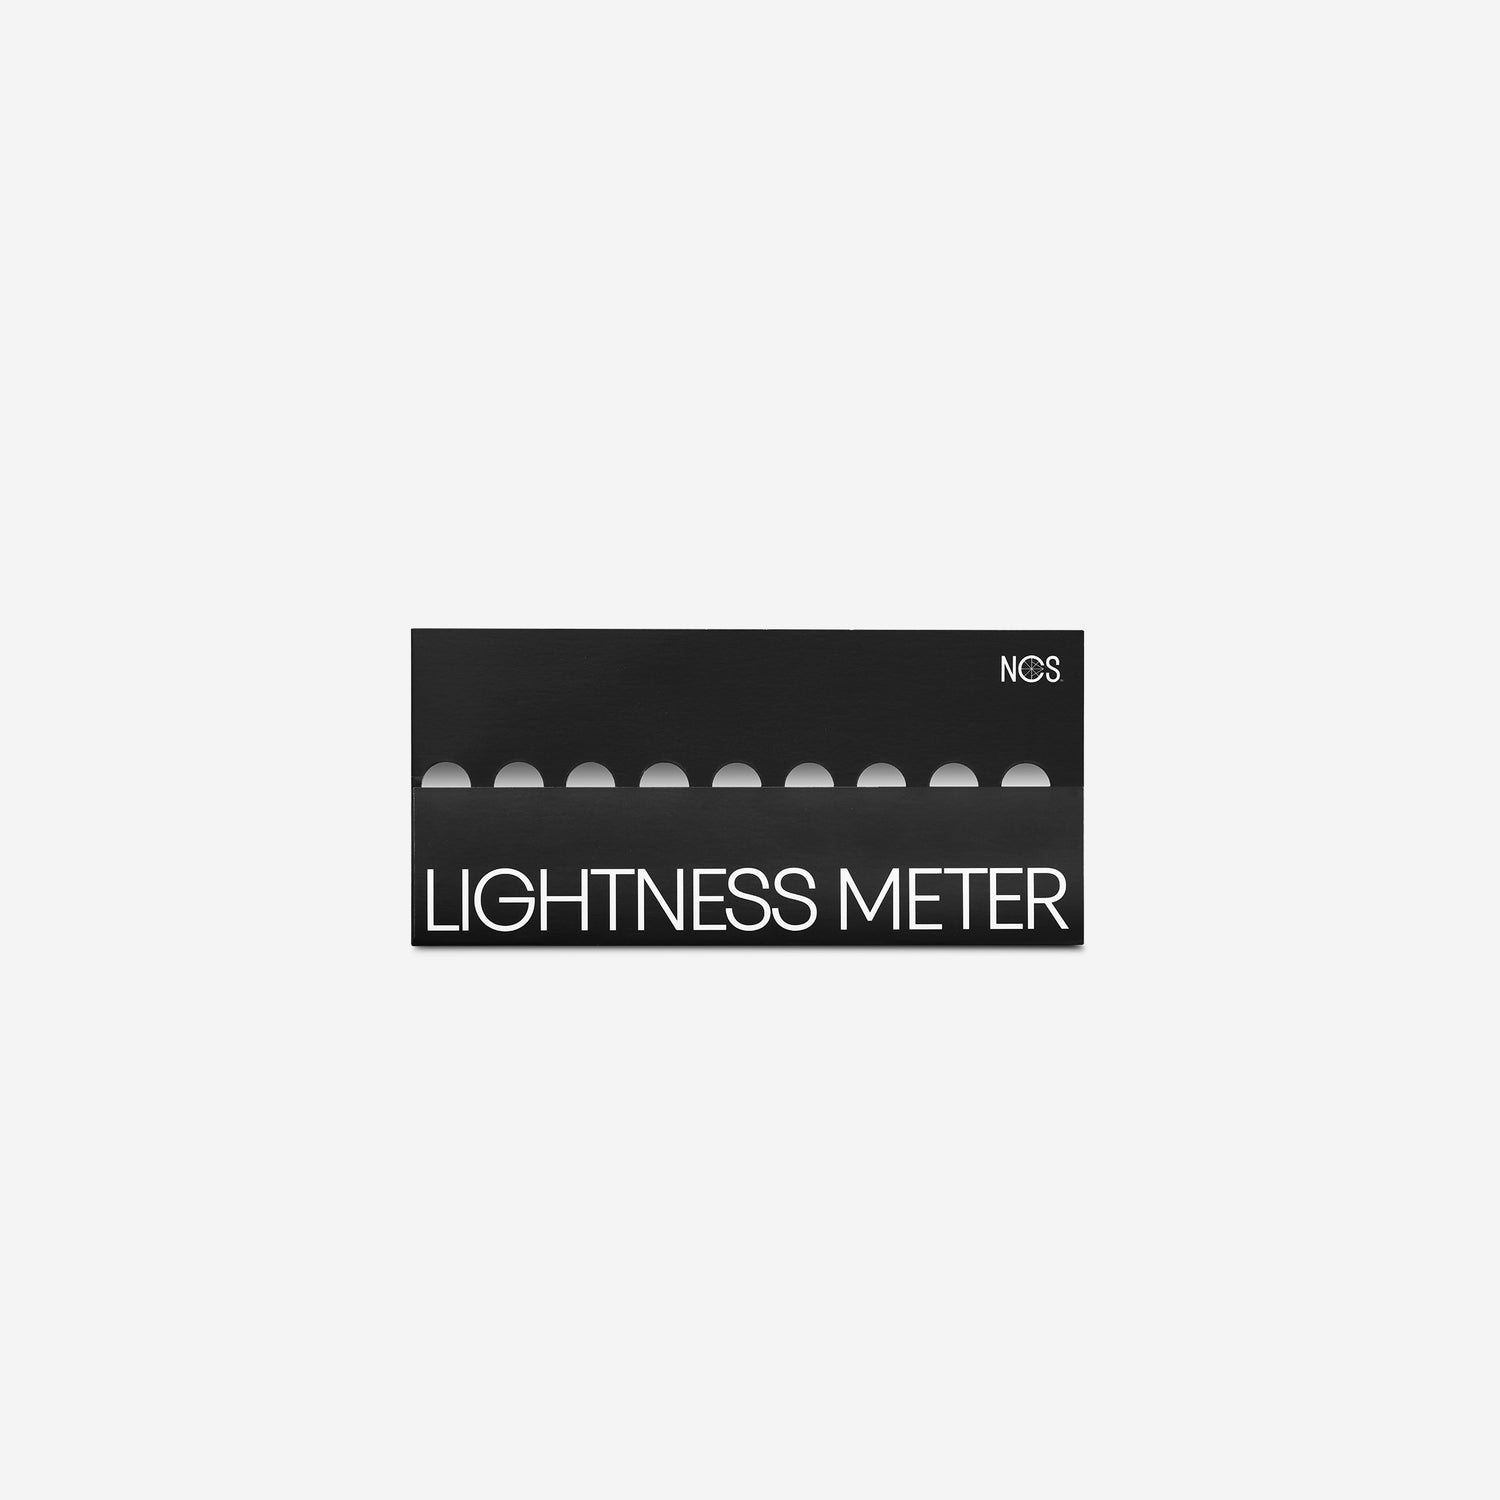 NCS Lightness meter